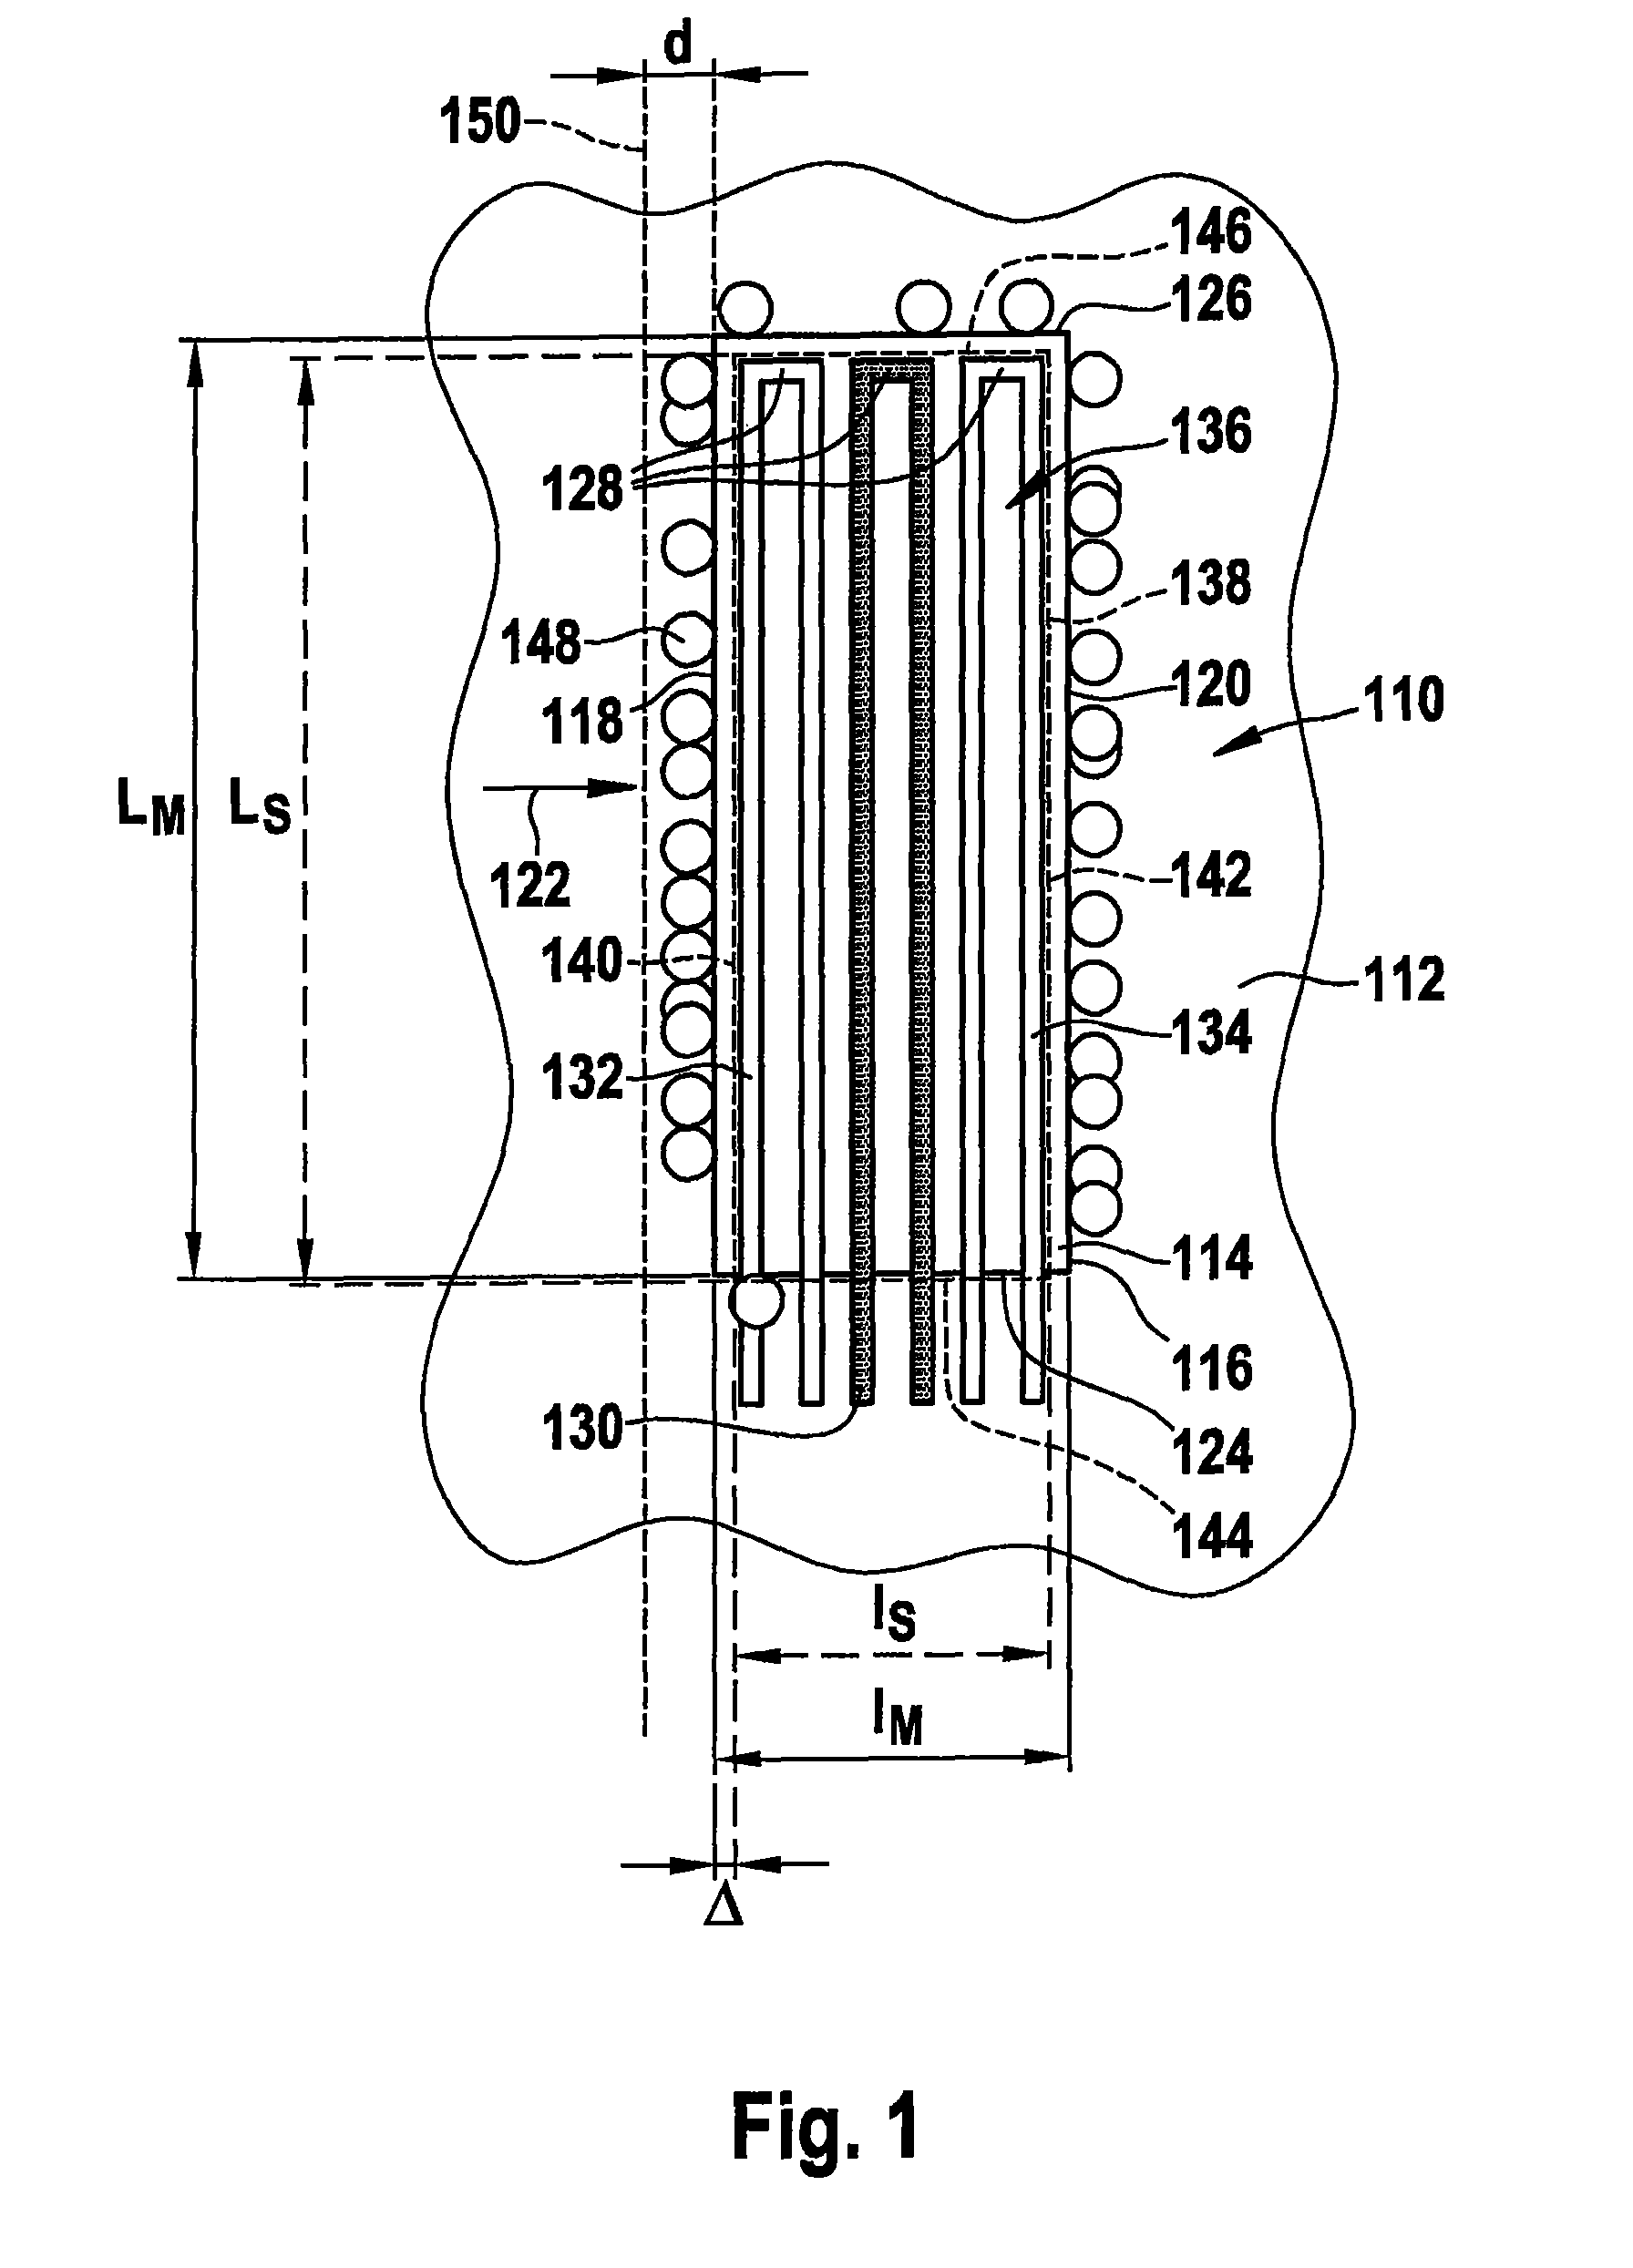 Hot-film air-mass meter having a flow separating element